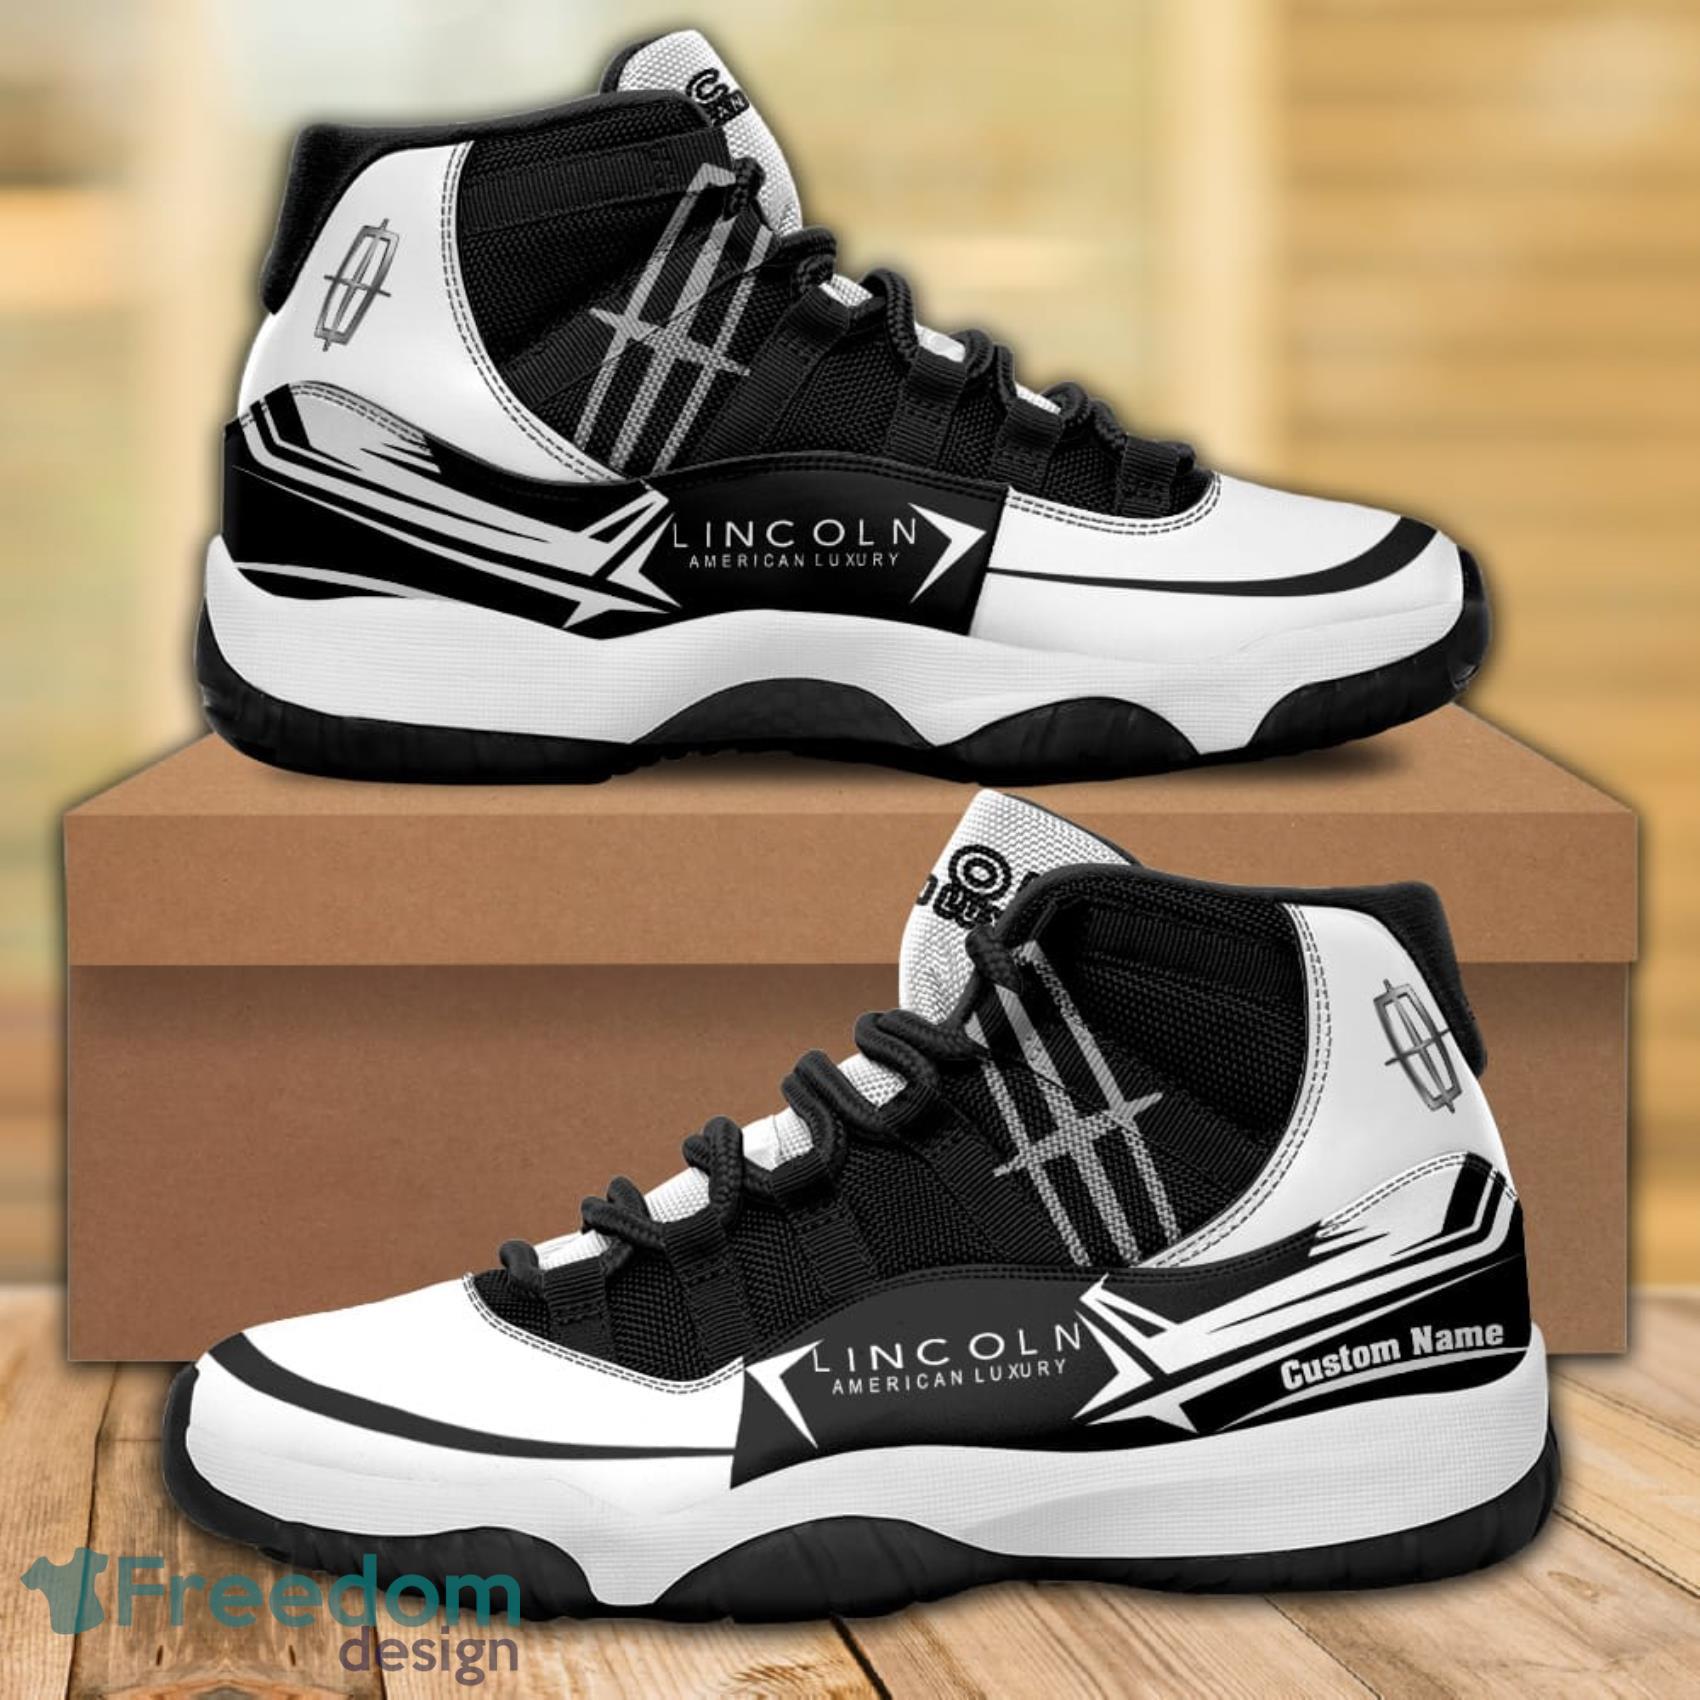 Lincoln Custom Name Any Logo Or Air Jordan 11 Shoes Gift For Fans -  Freedomdesign